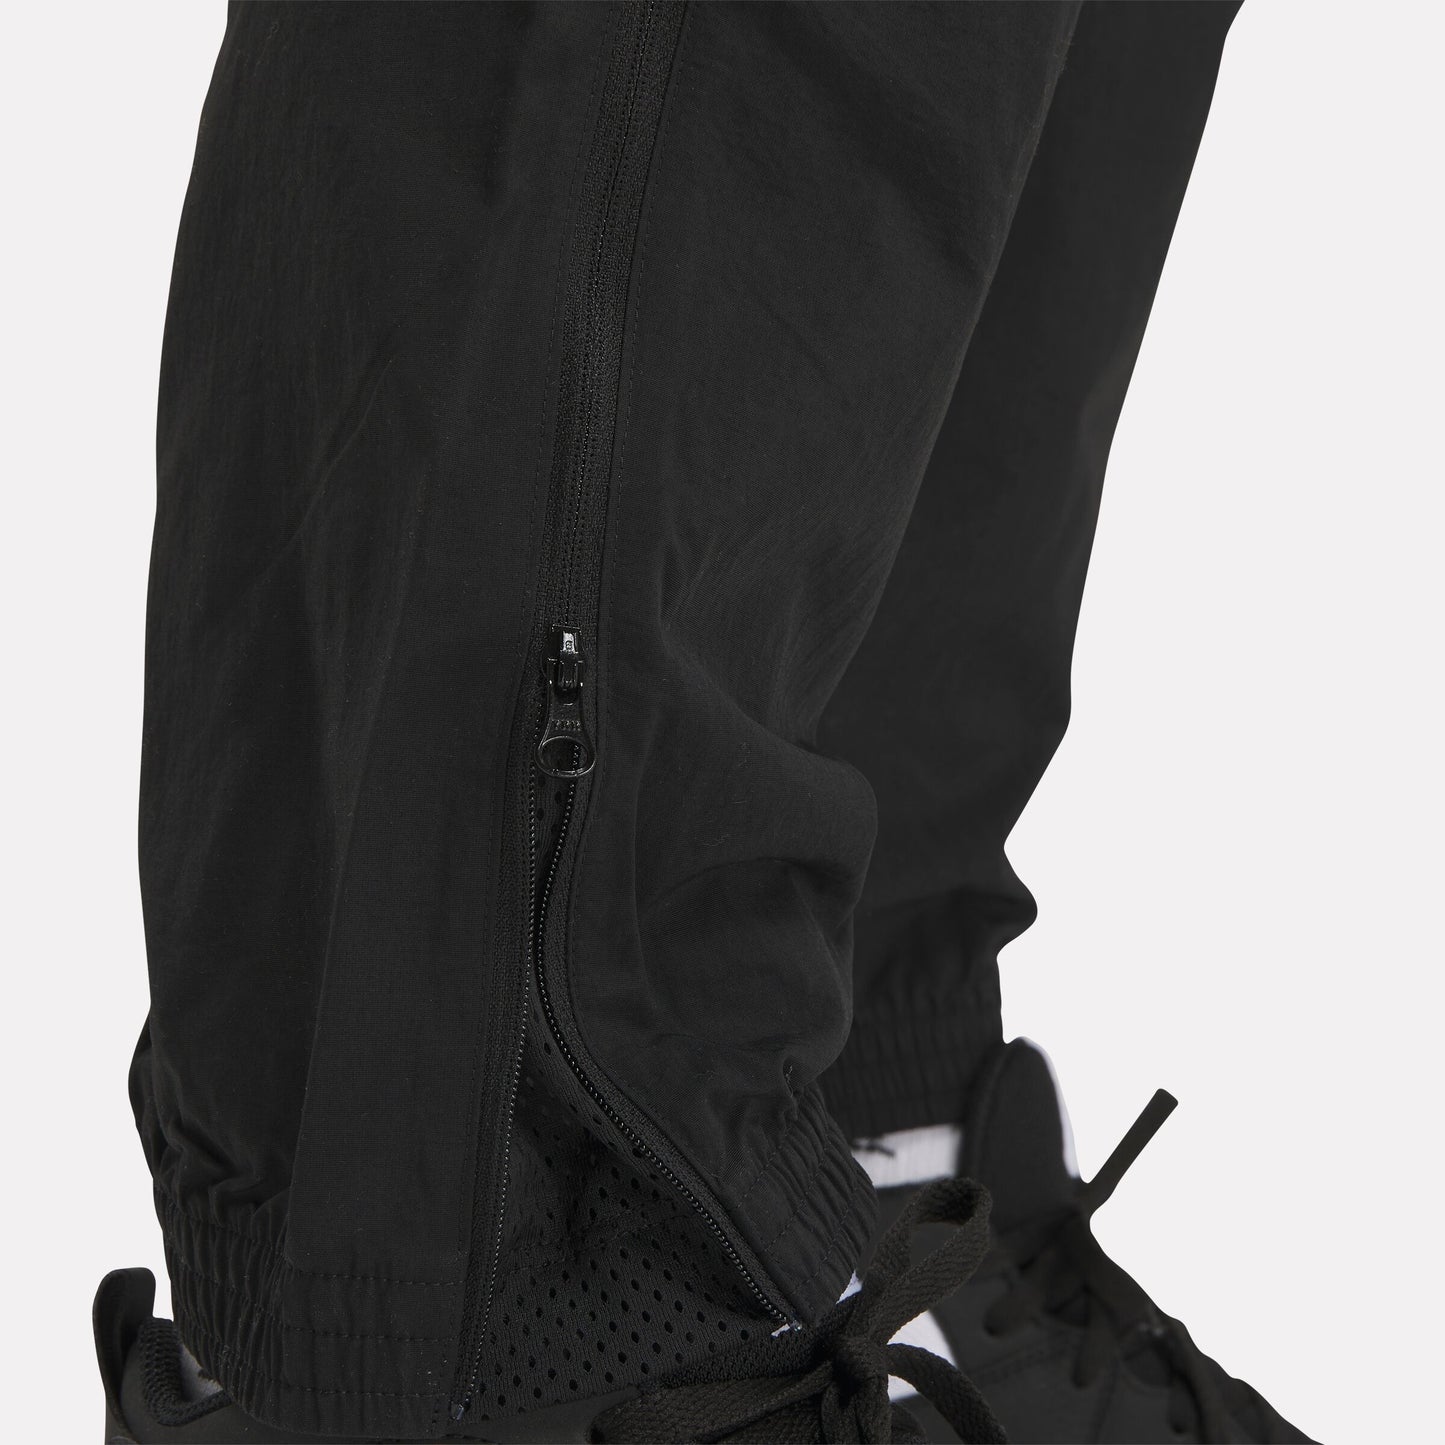 ATR Hoopwear Pants Black